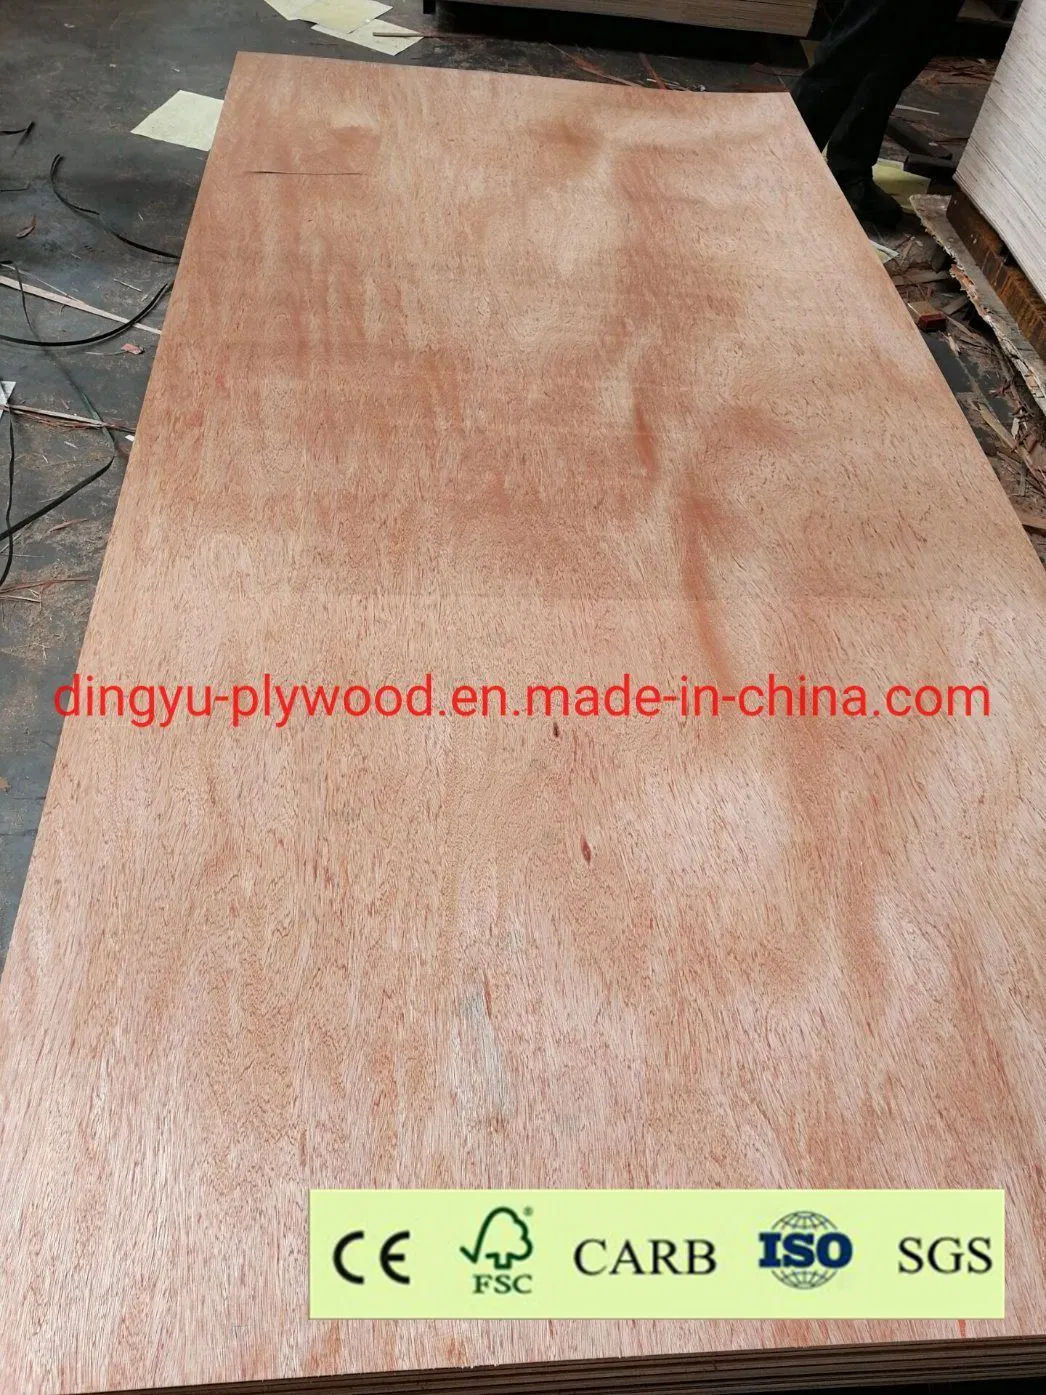 Bintangor Plywood Hot Press Two Times Poplar/Hardwood Core Board